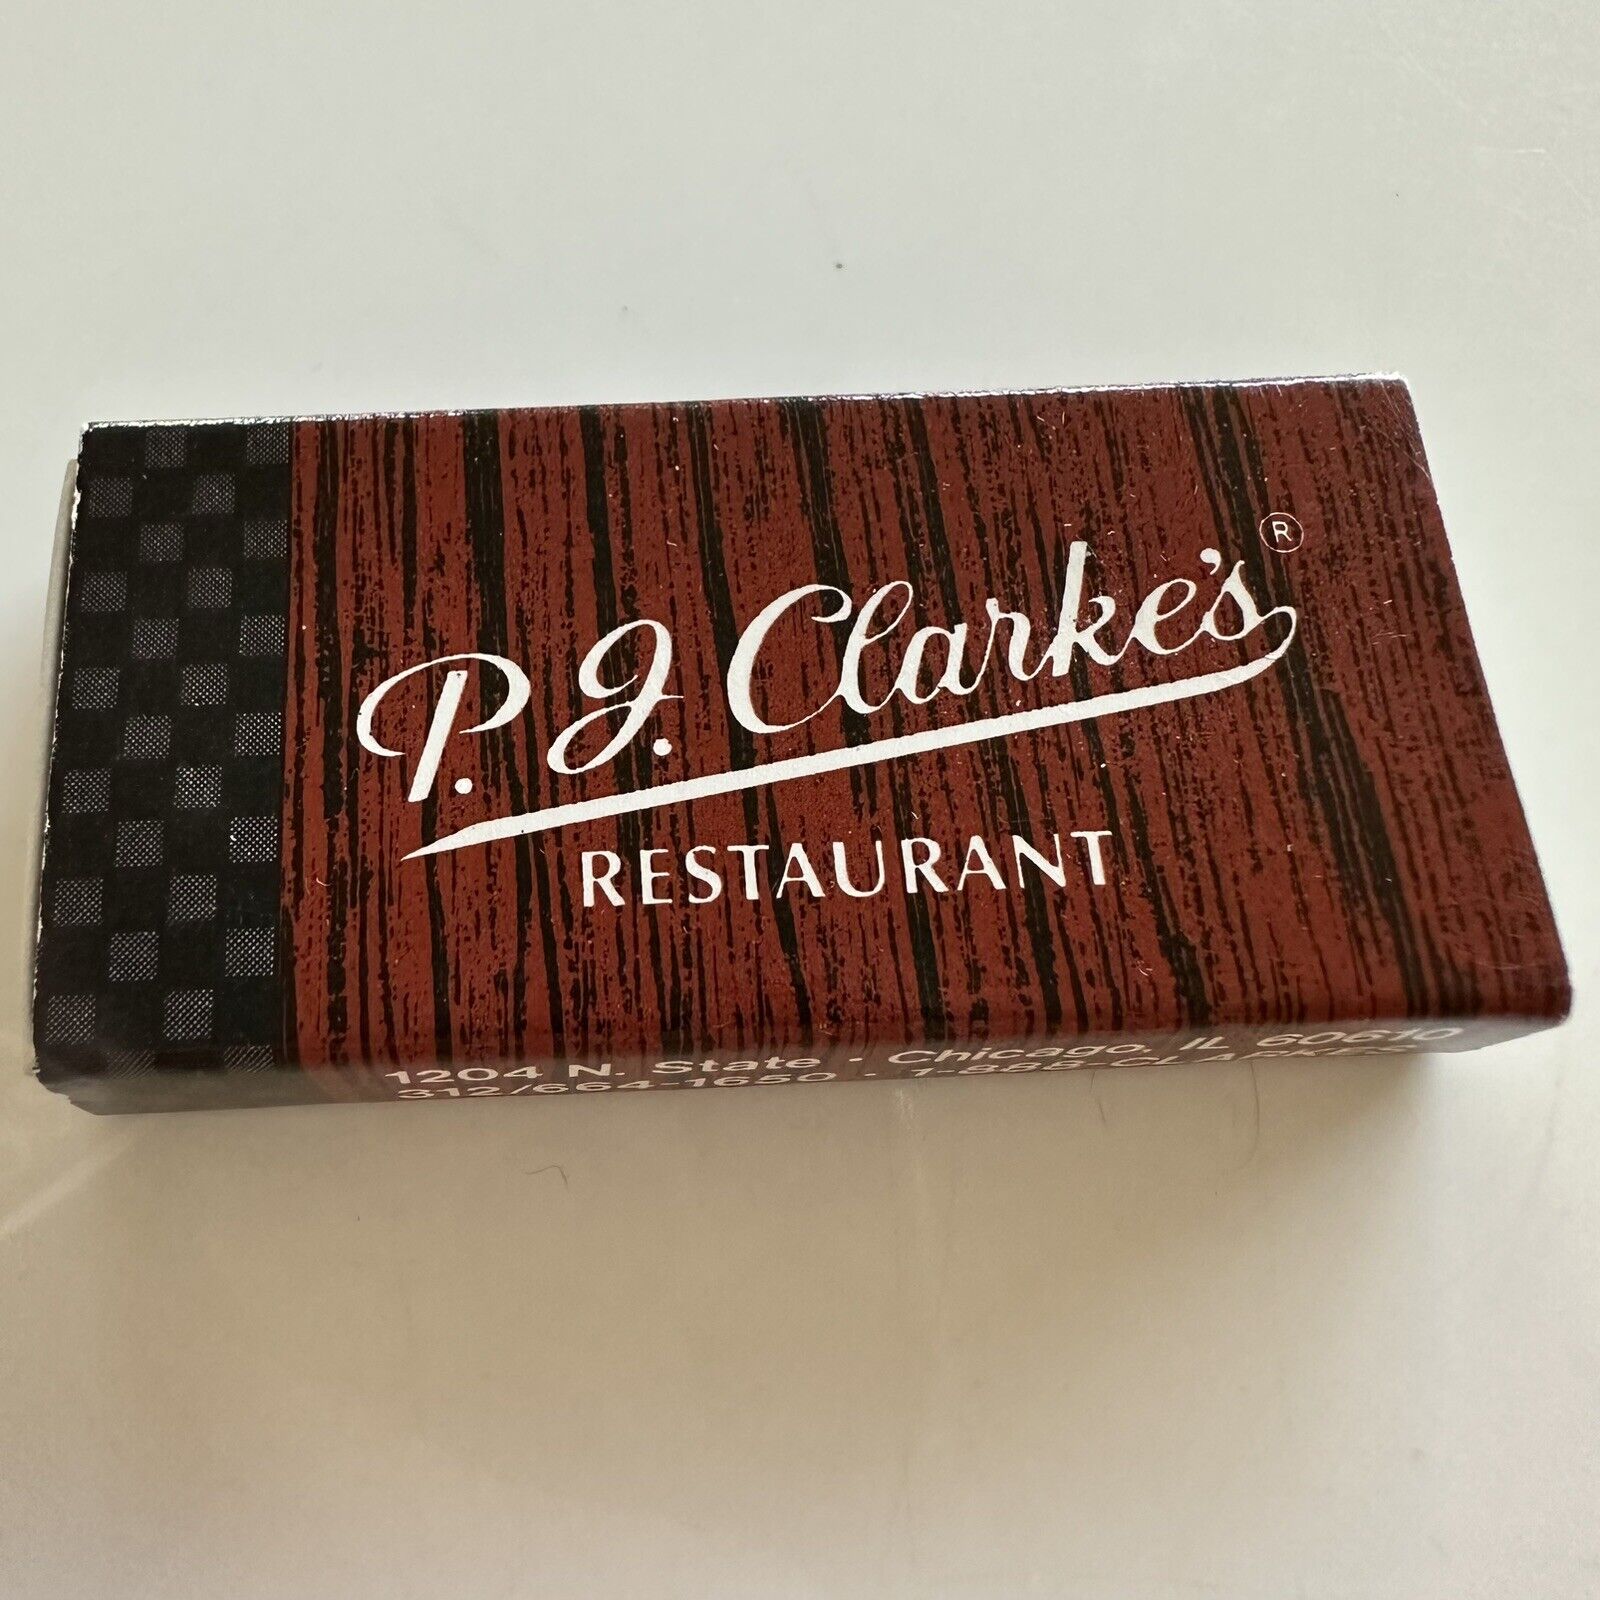 P.J. Clarke’s Restaurant - Chicago, Illinois - Matchbox